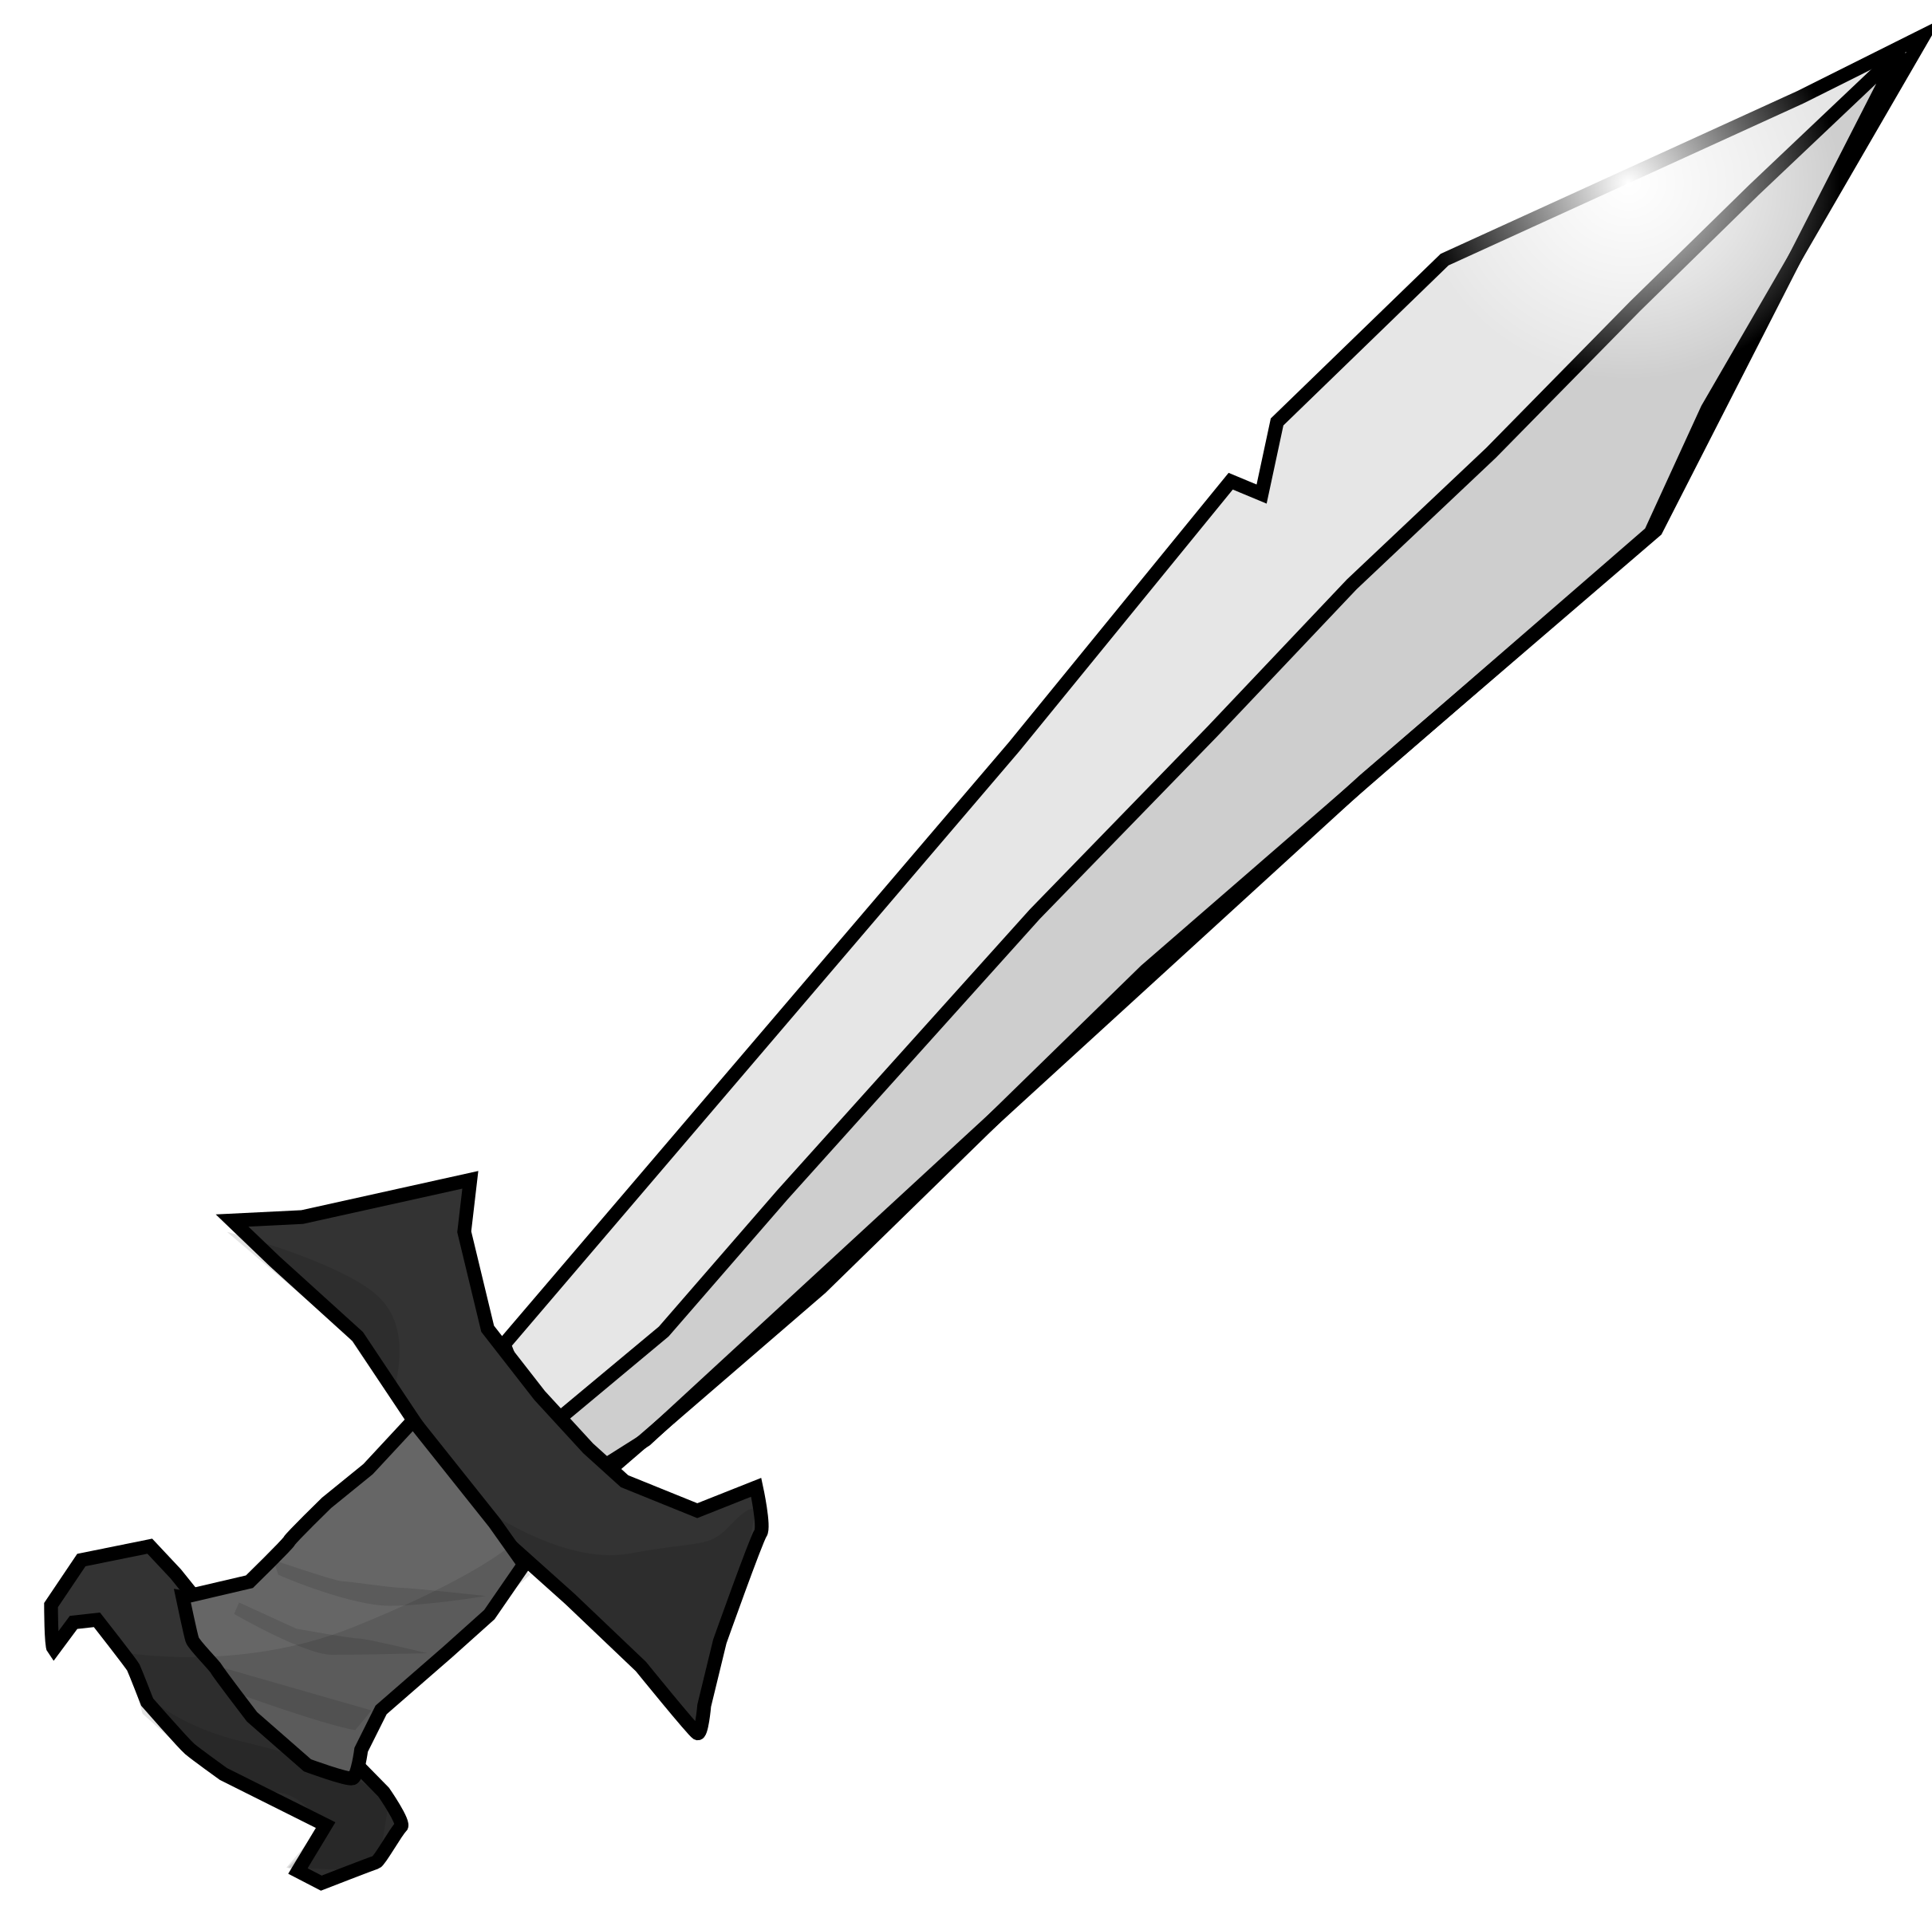 Sword clipart #12, Download drawings